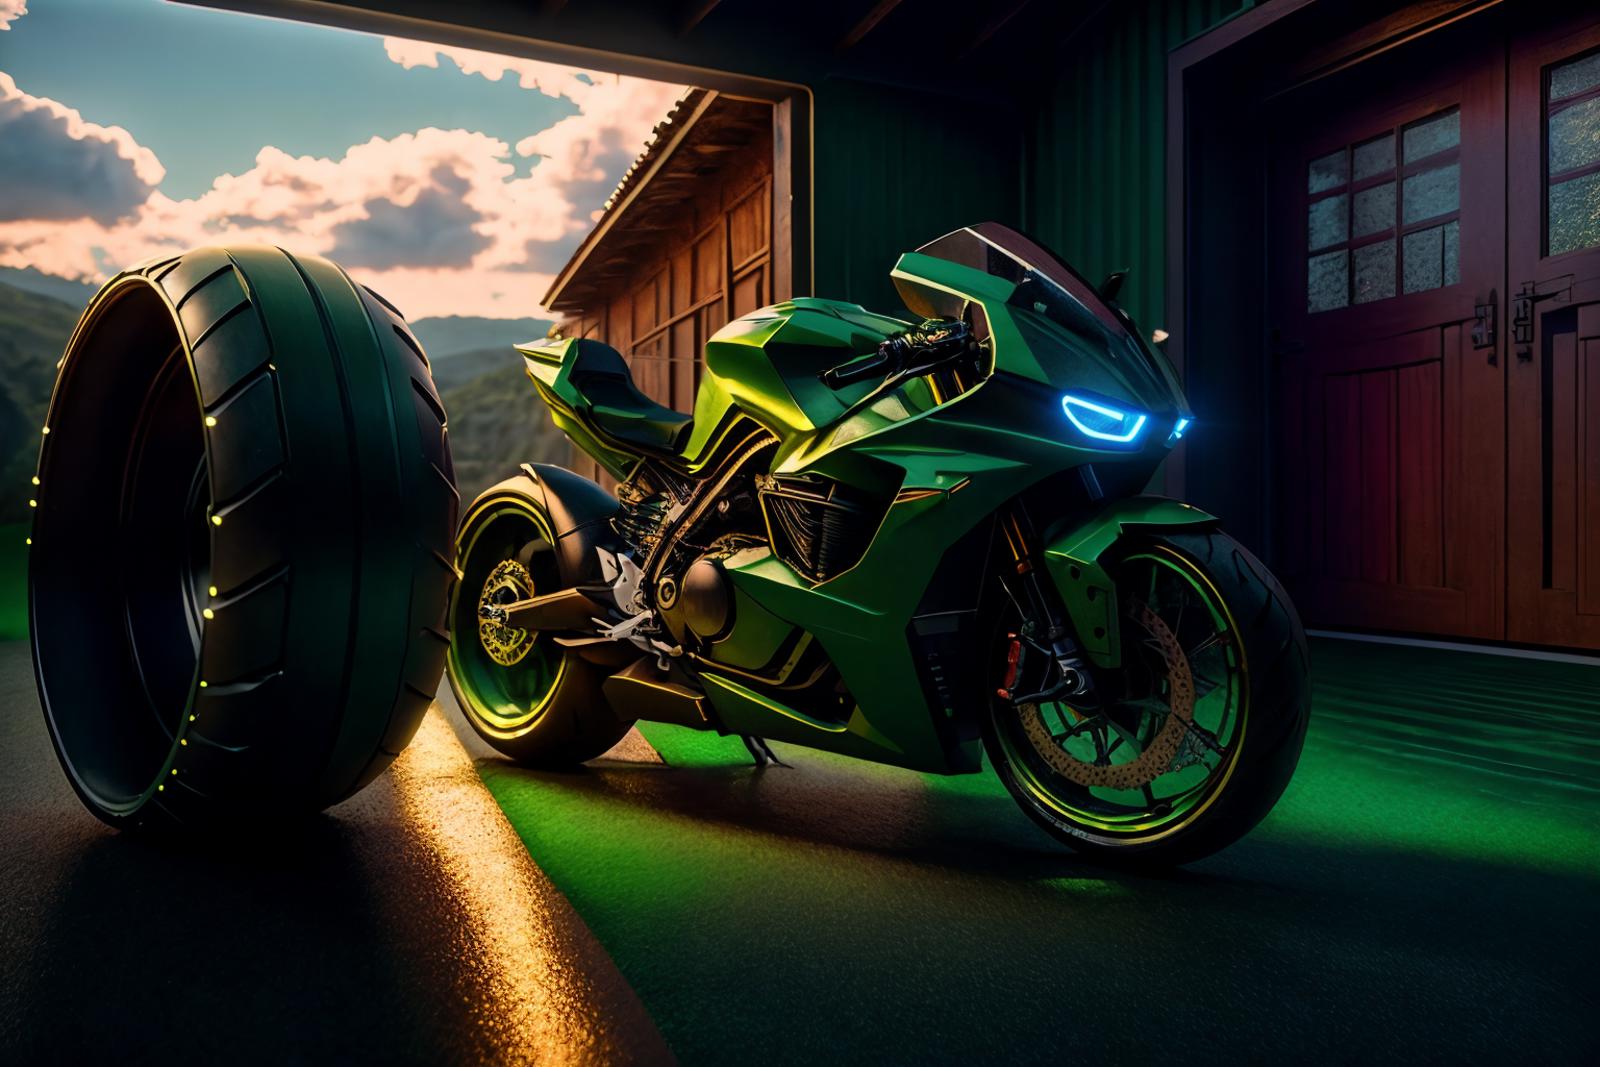 Futuristic Motorcycle Generator Concept image by DeViLDoNia